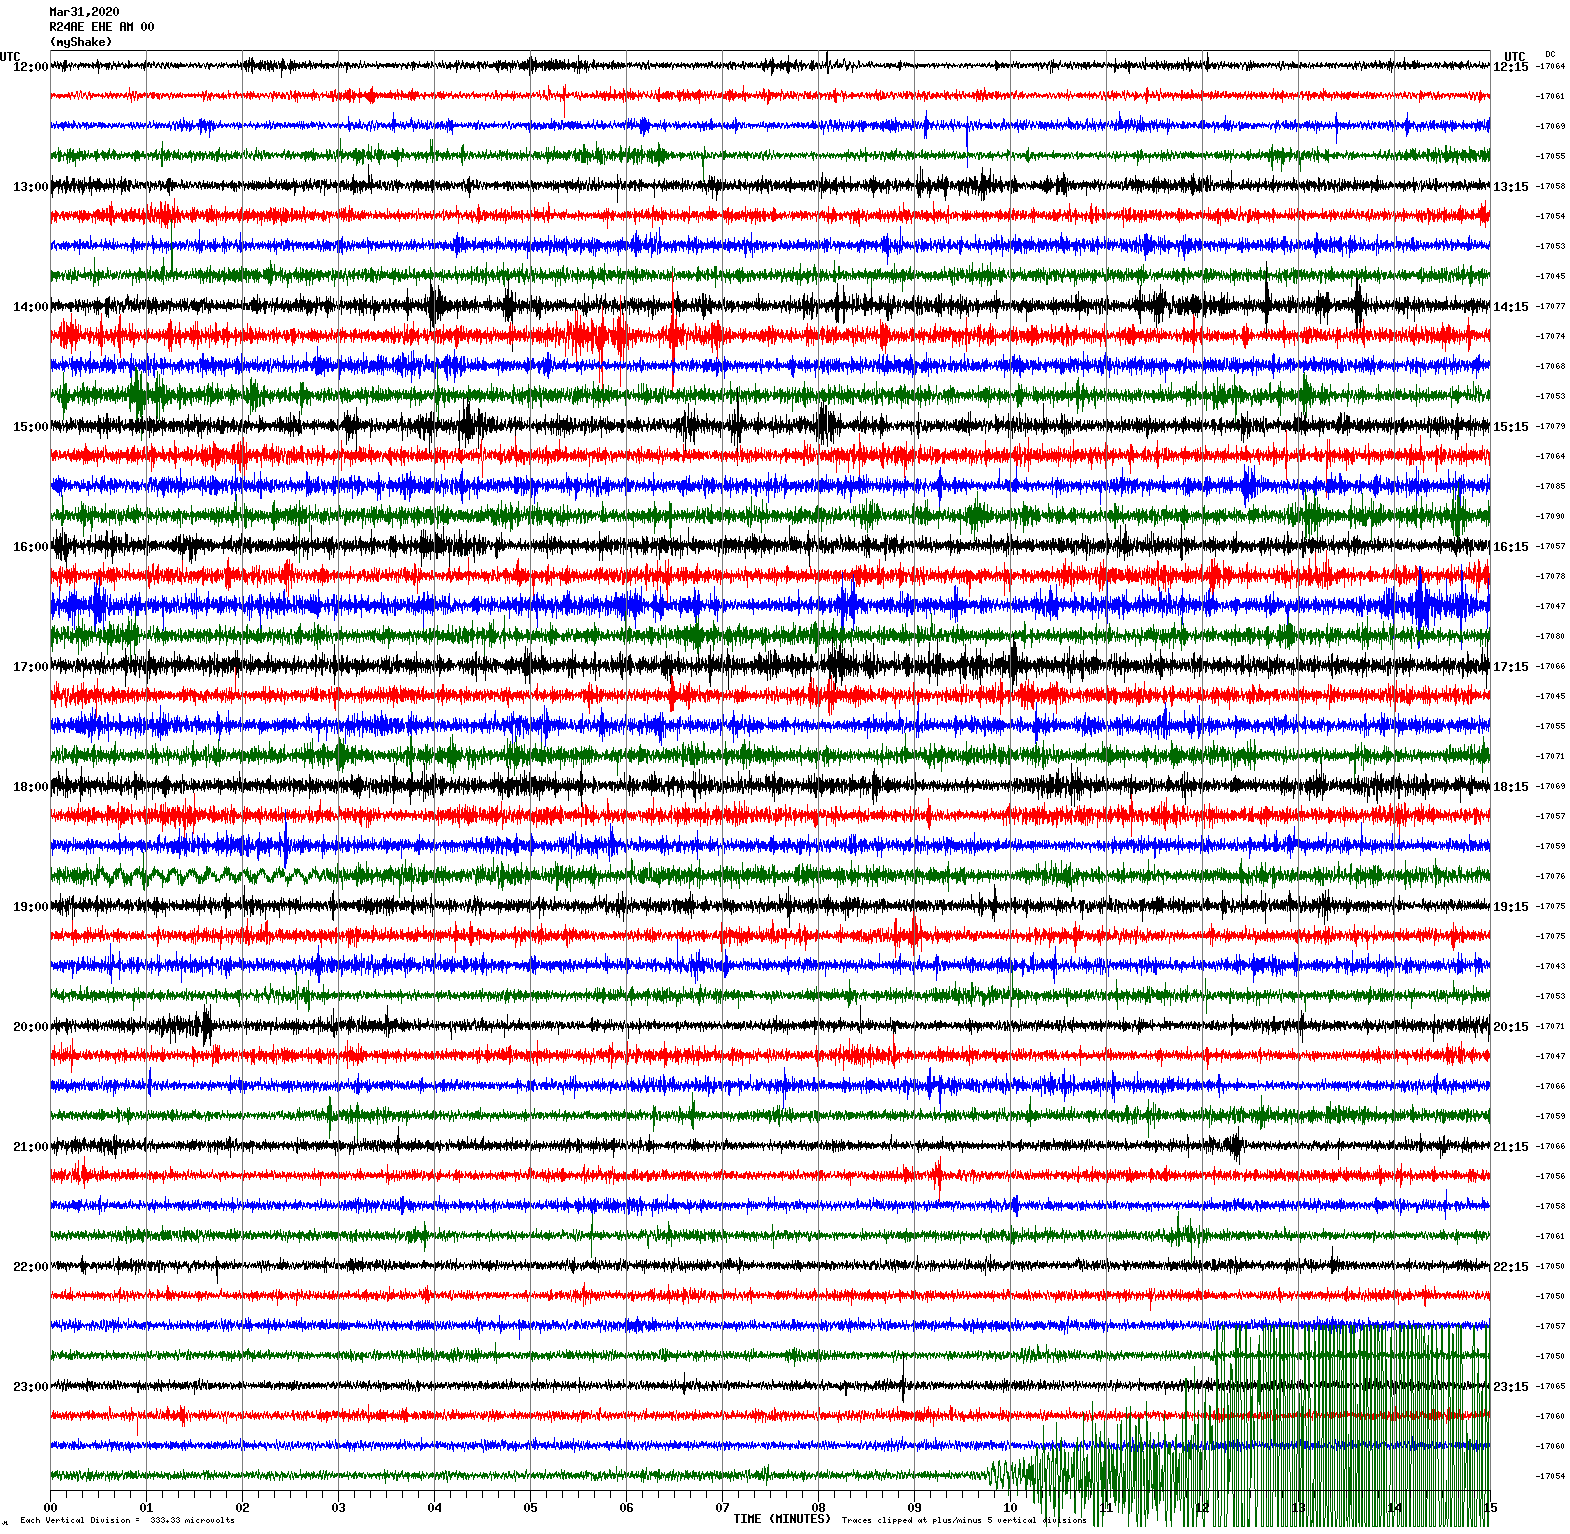 /seismic-data/R24AE/R24AE_EHE_AM_00.2020033112.gif